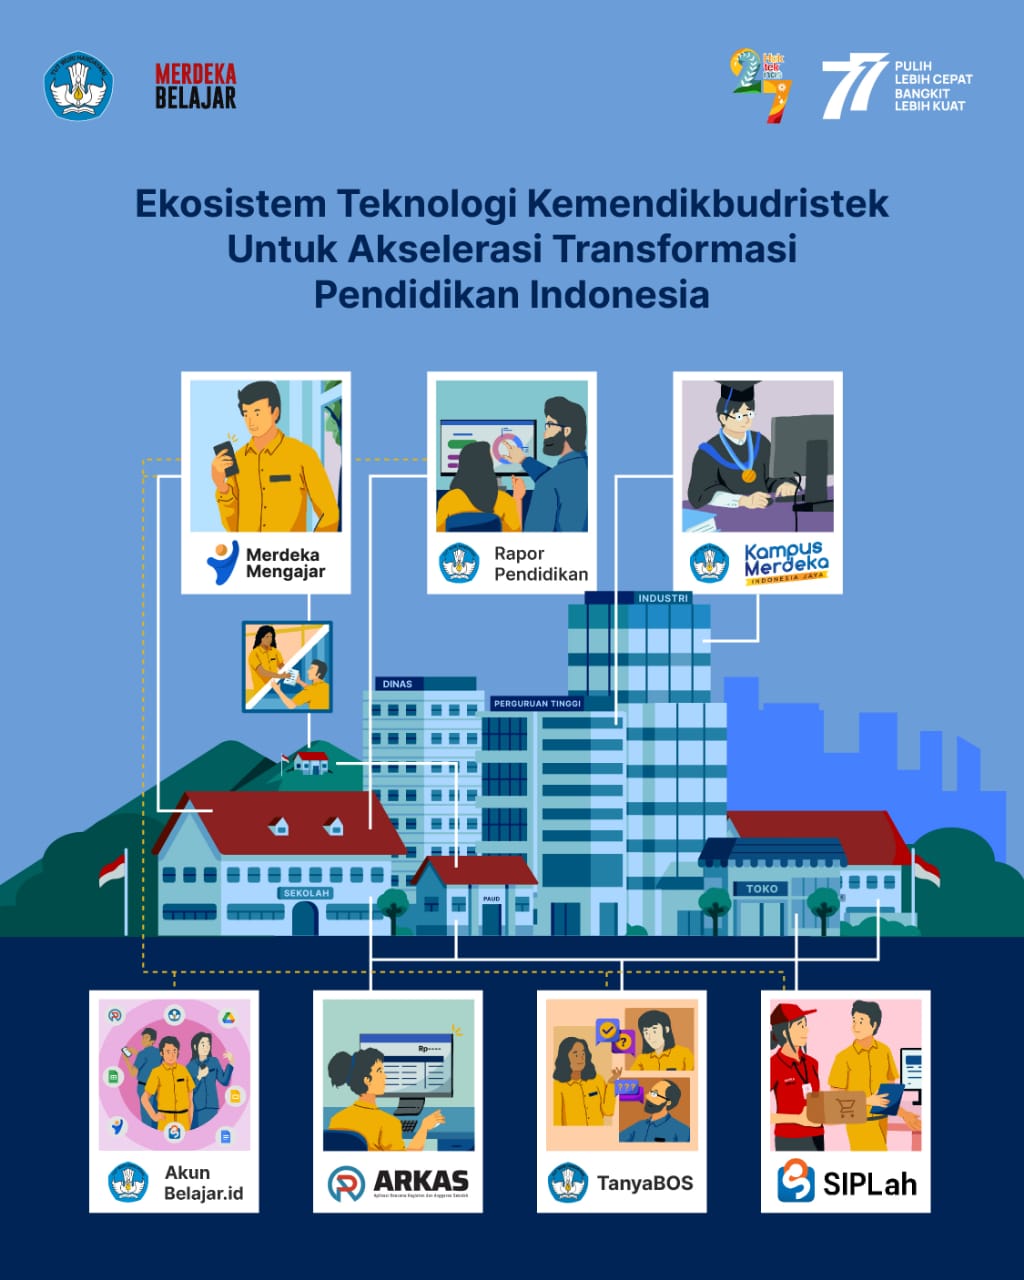 Ekosistem Teknologi Kemendikbudristek Majukan Pendidikan Indonesia